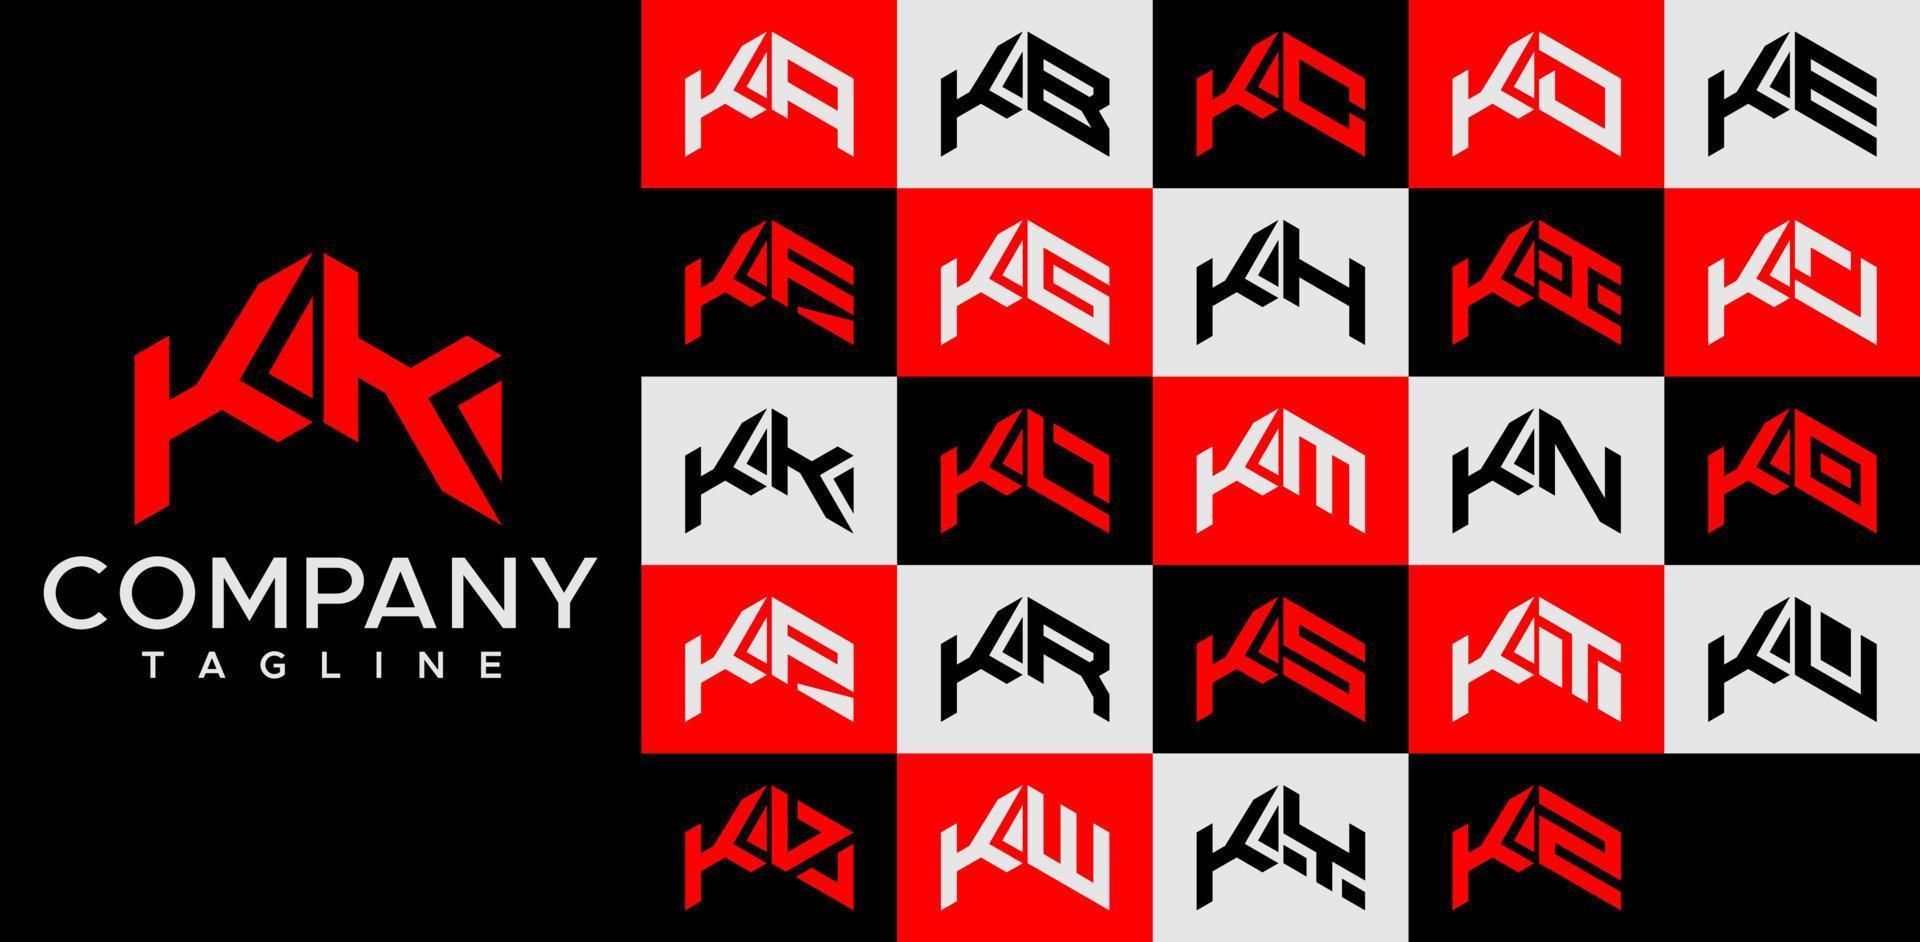 hacia arriba flecha letra k logo diseño modelo colocar. resumen línea kk k letra logo vector. vector